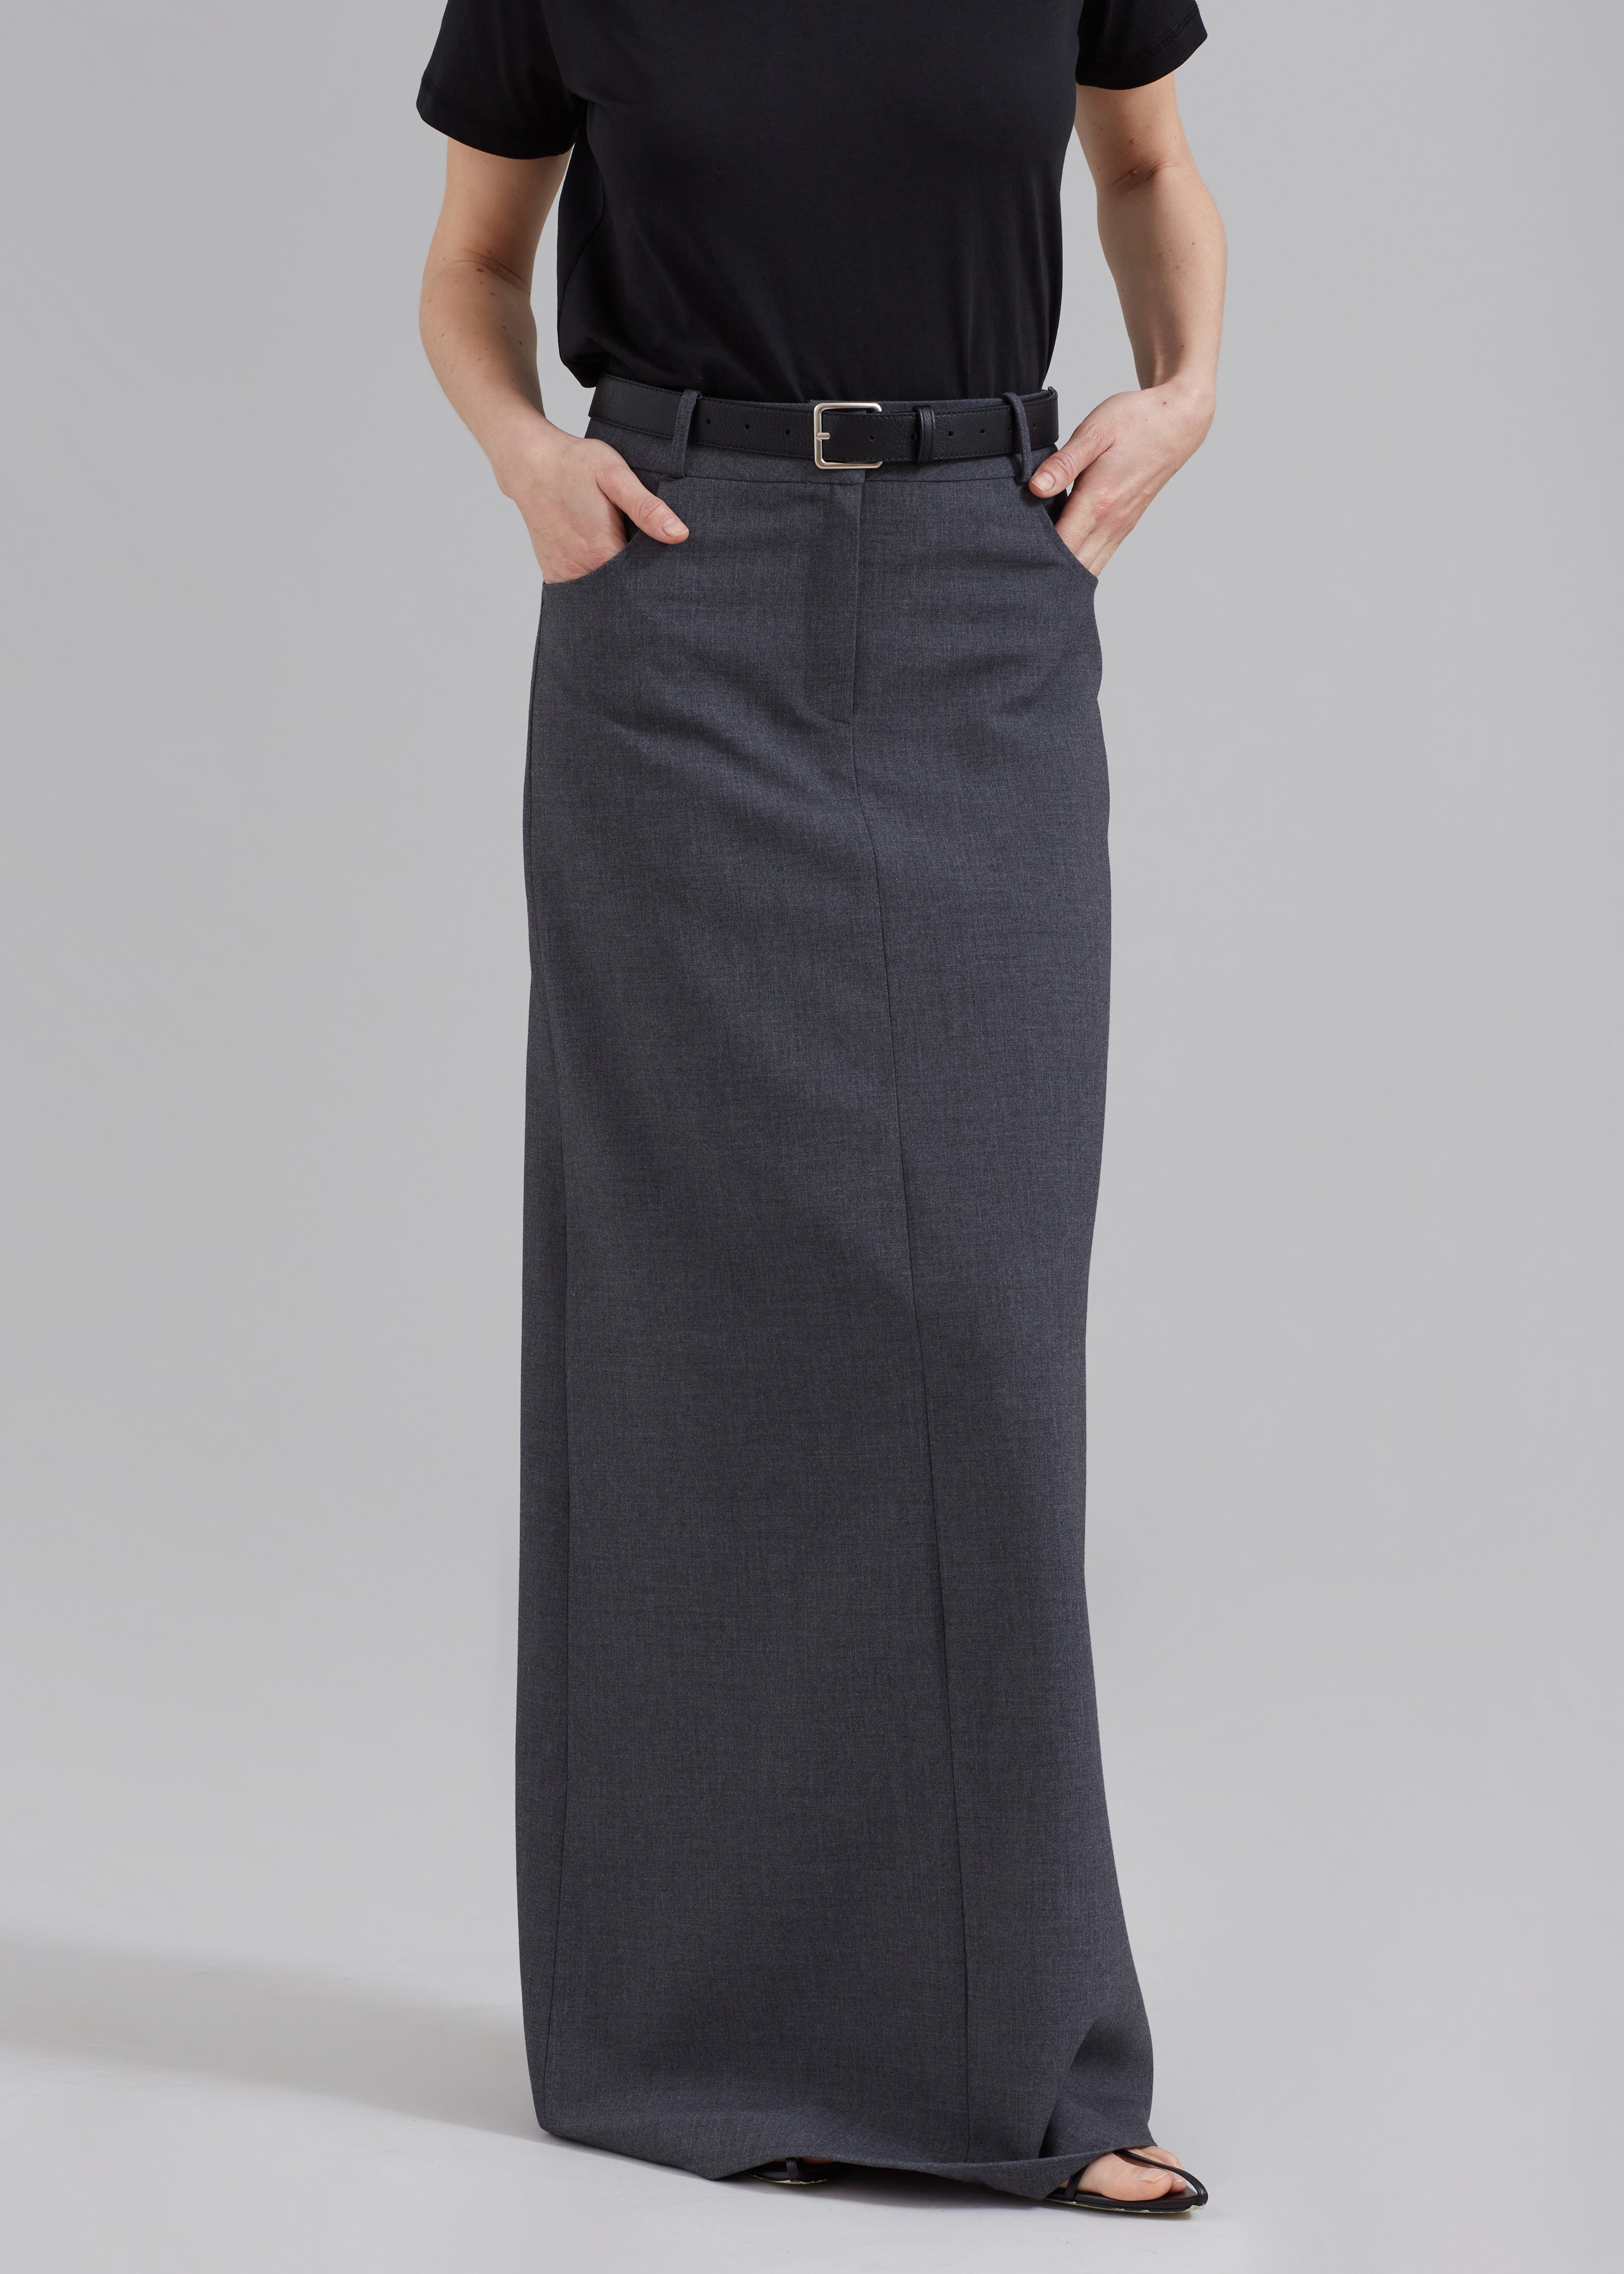 Malvo Long Pencil Skirt - Charcoal - 2